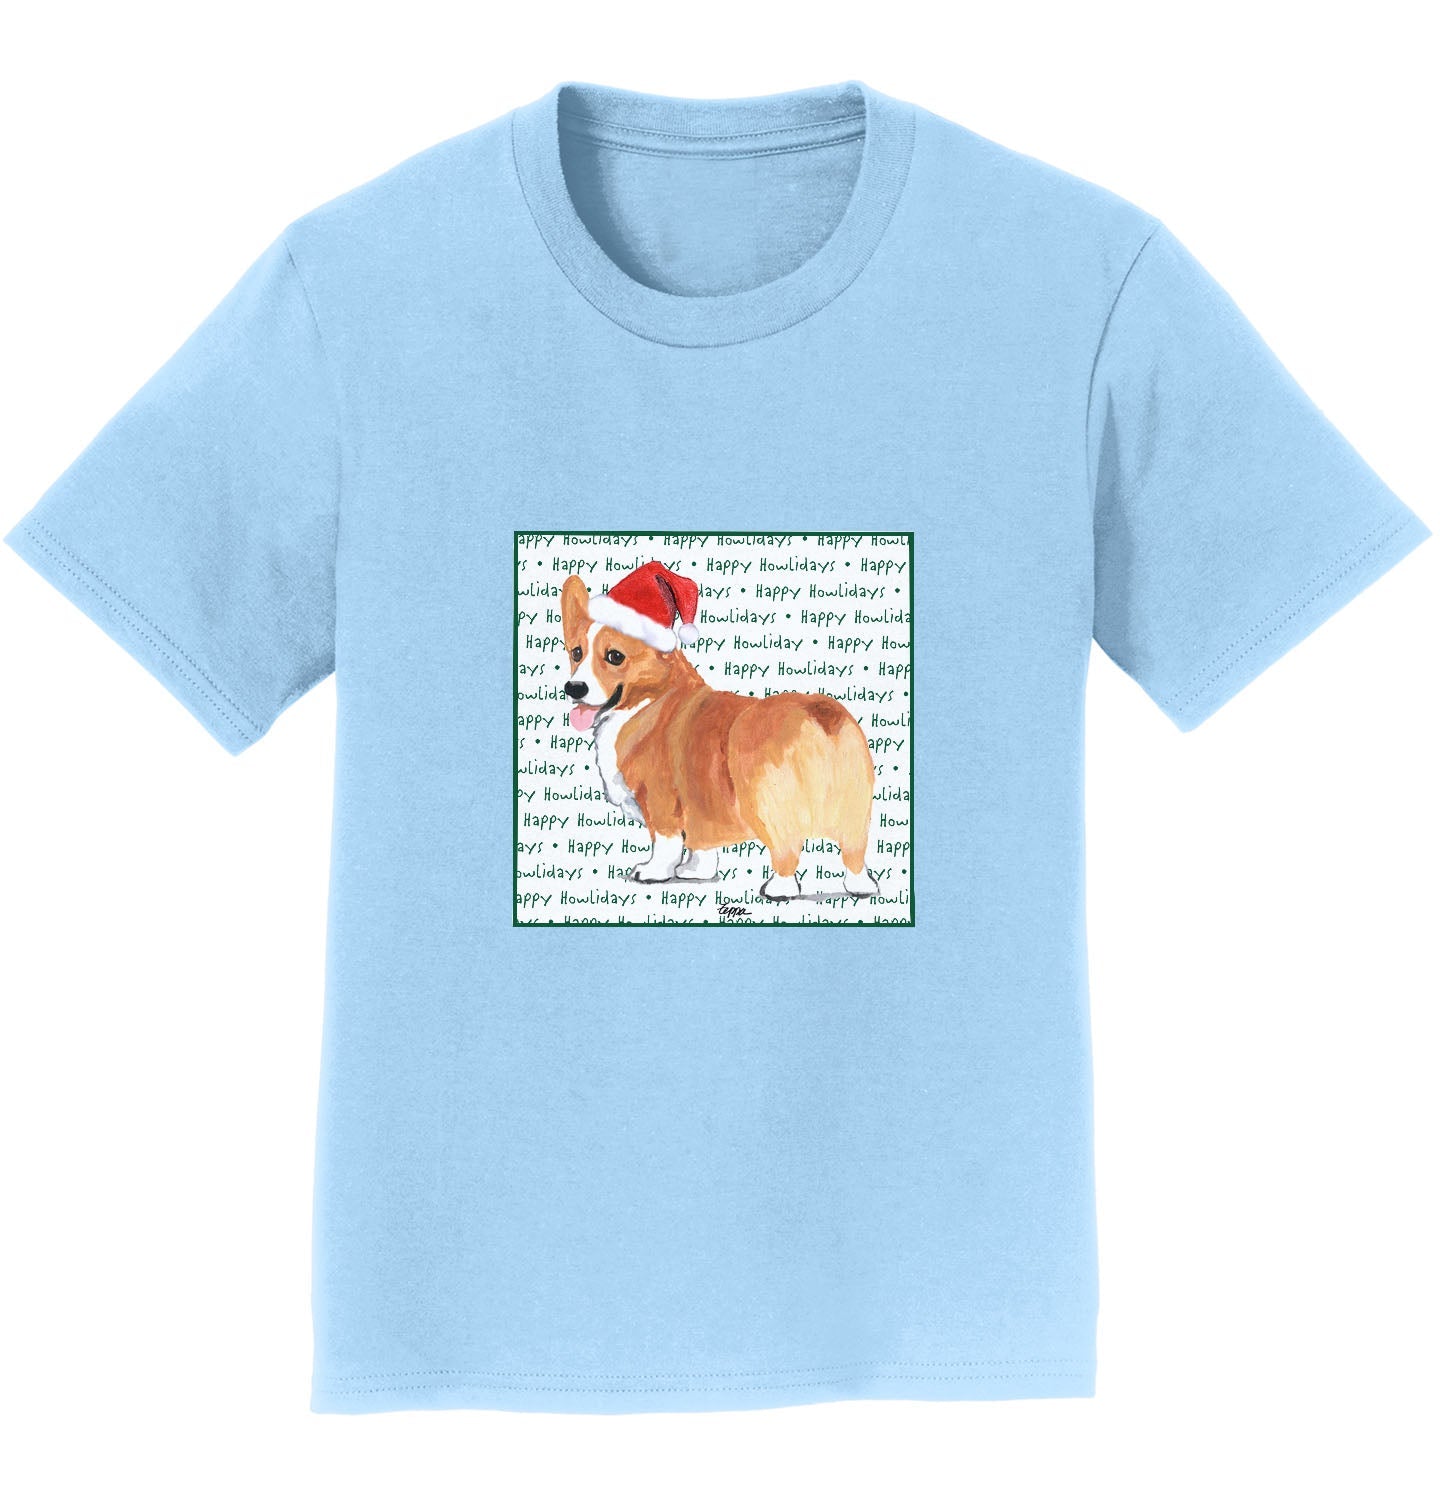 Pembroke Welsh Corgi (Red) Happy Howlidays Text - Kids' Unisex T-Shirt